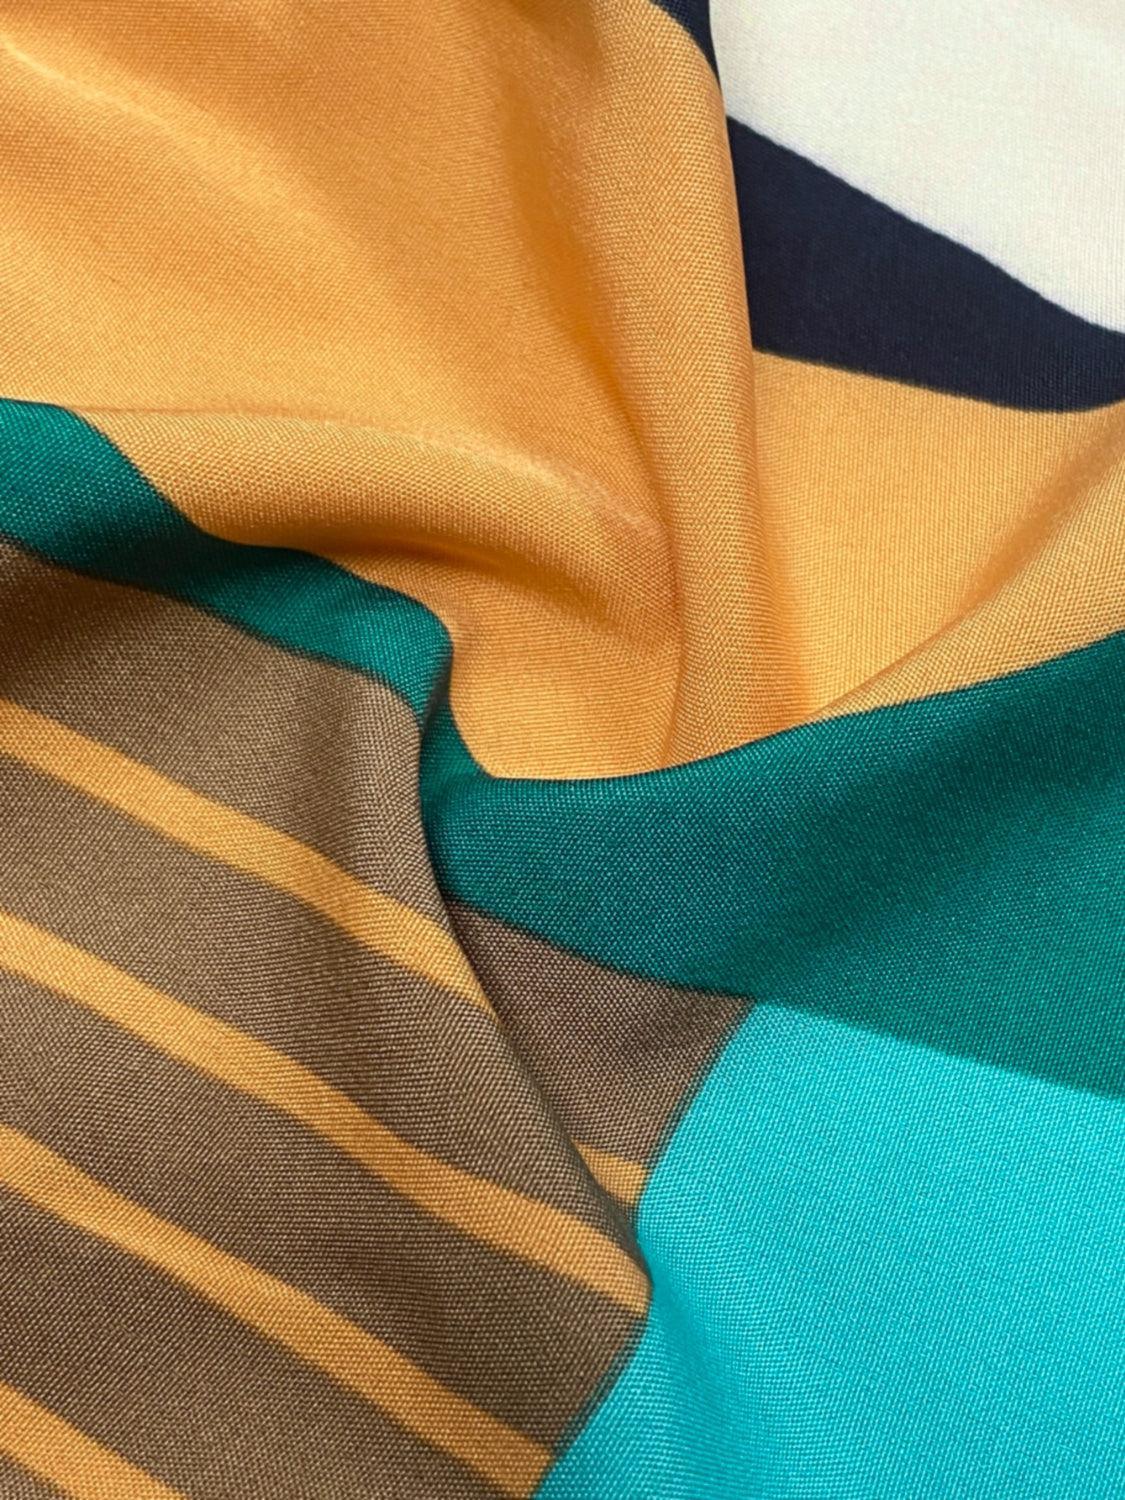 a close up of a multi colored fabric